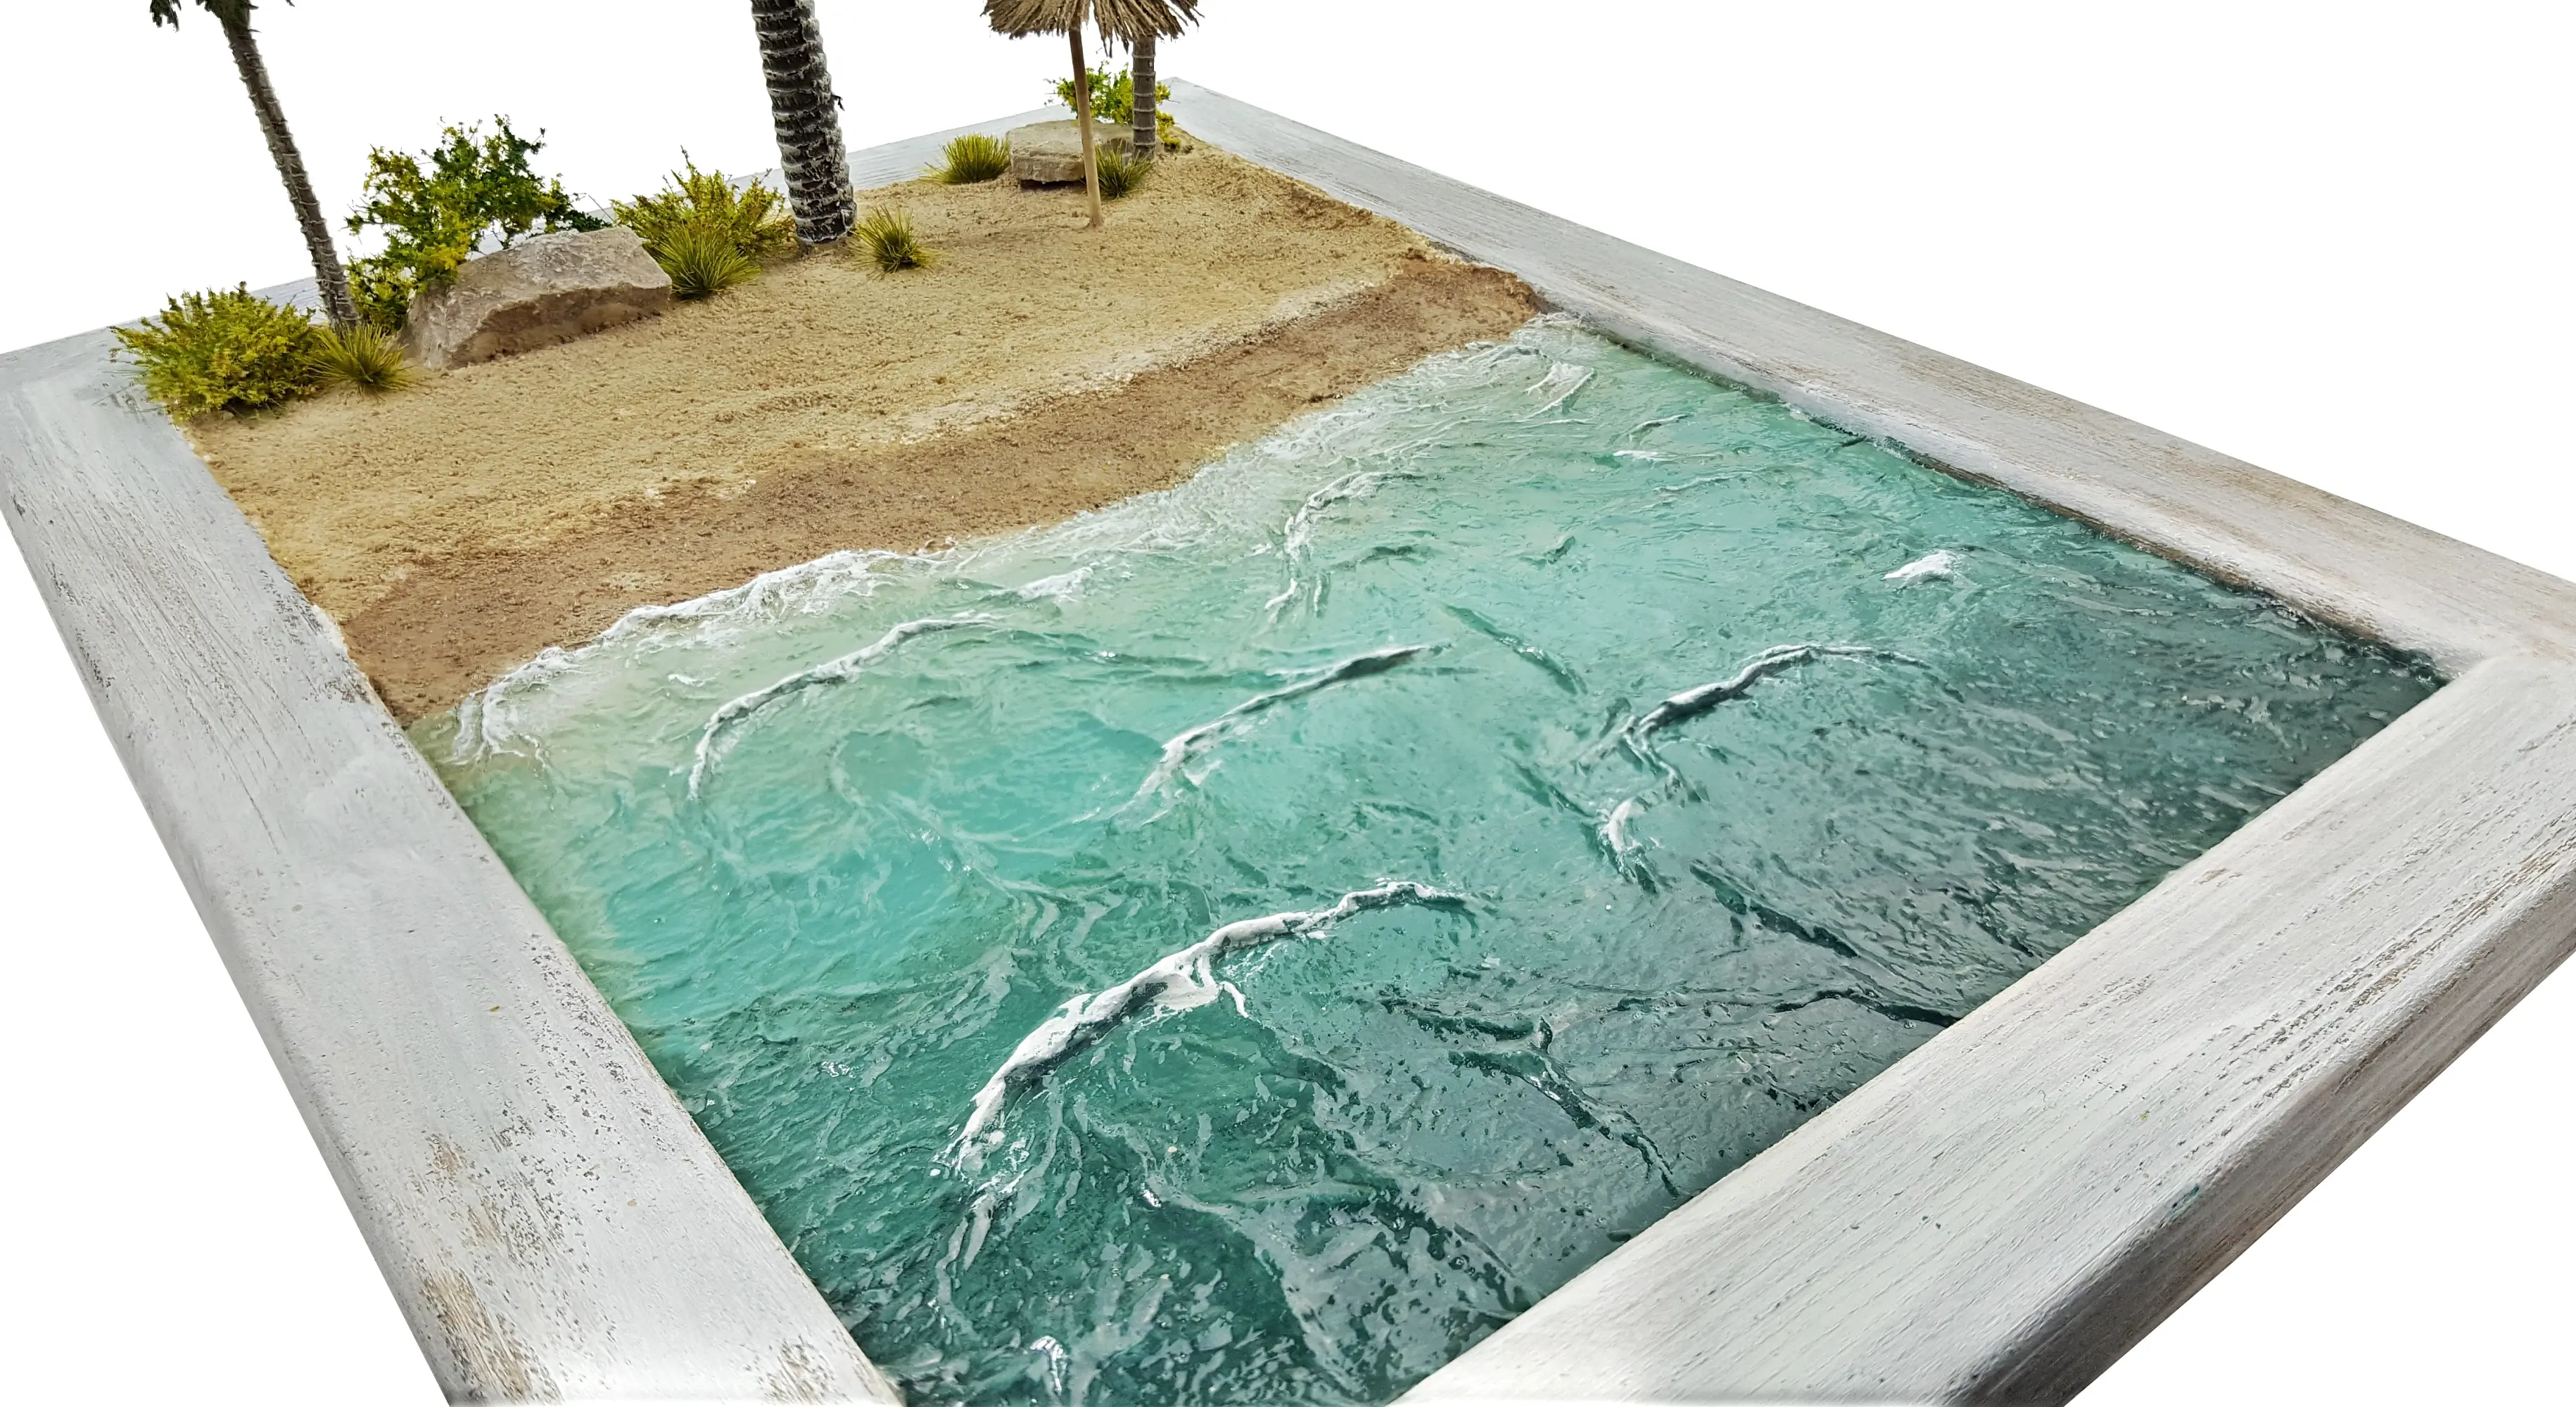 Miniature azure sea and beach diorama